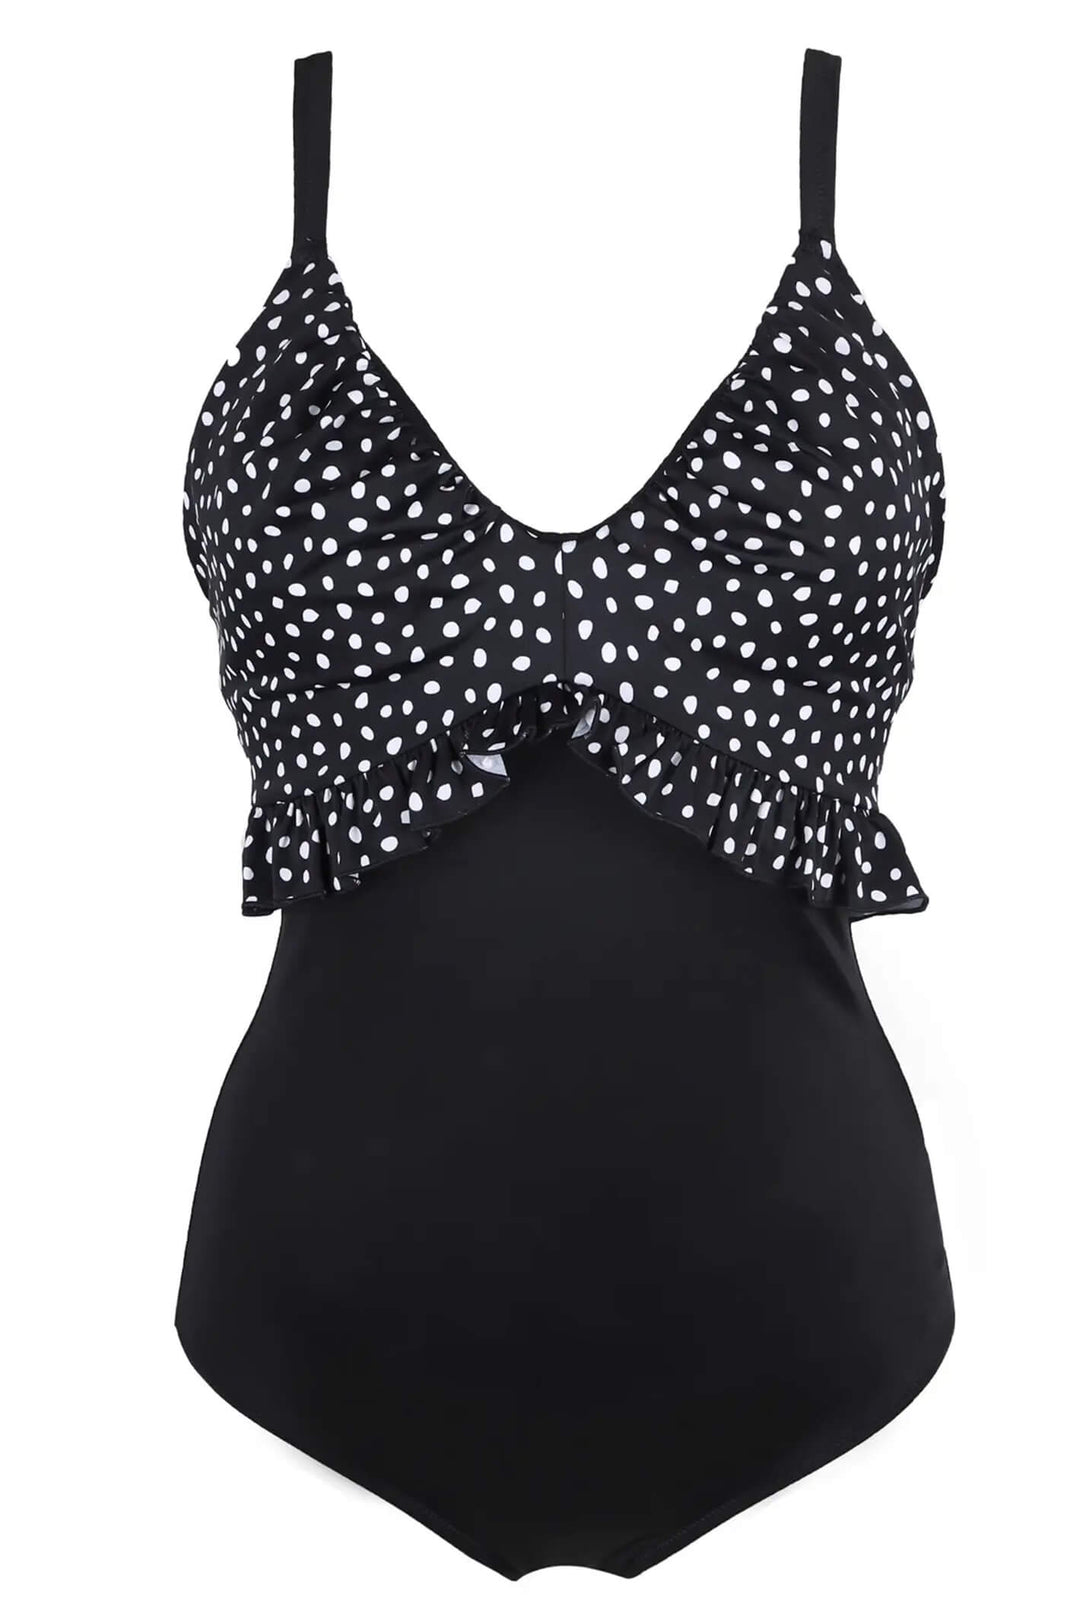 Pour Moi PM3910 Hot Spots Frill Control Black & White Swimsuit - Shirley Allum Boutique